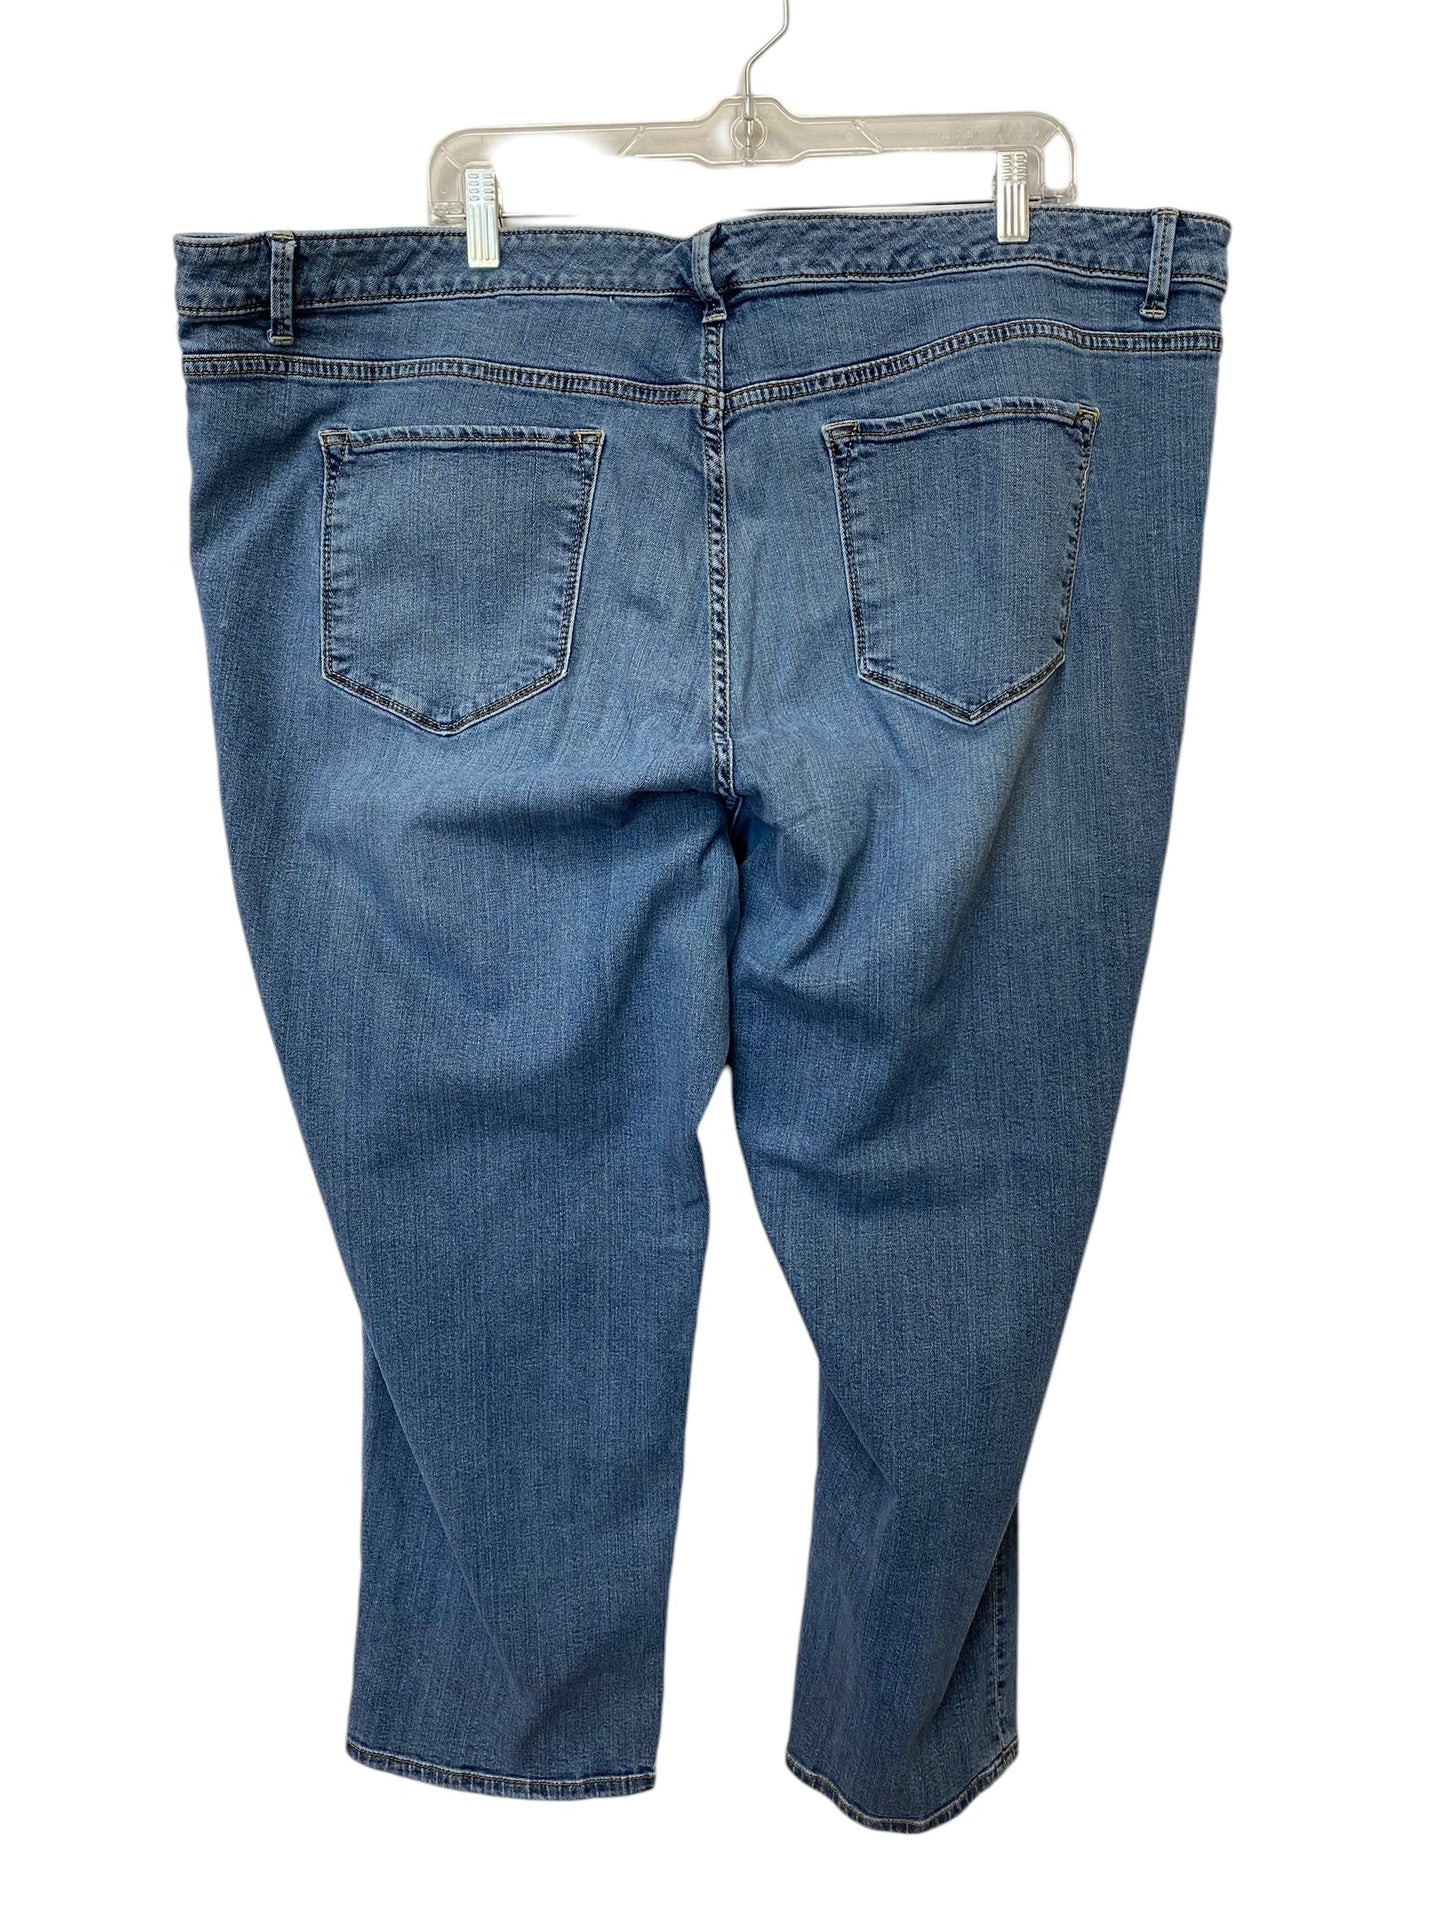 Jeans Boyfriend By Sonoma  Size: 24